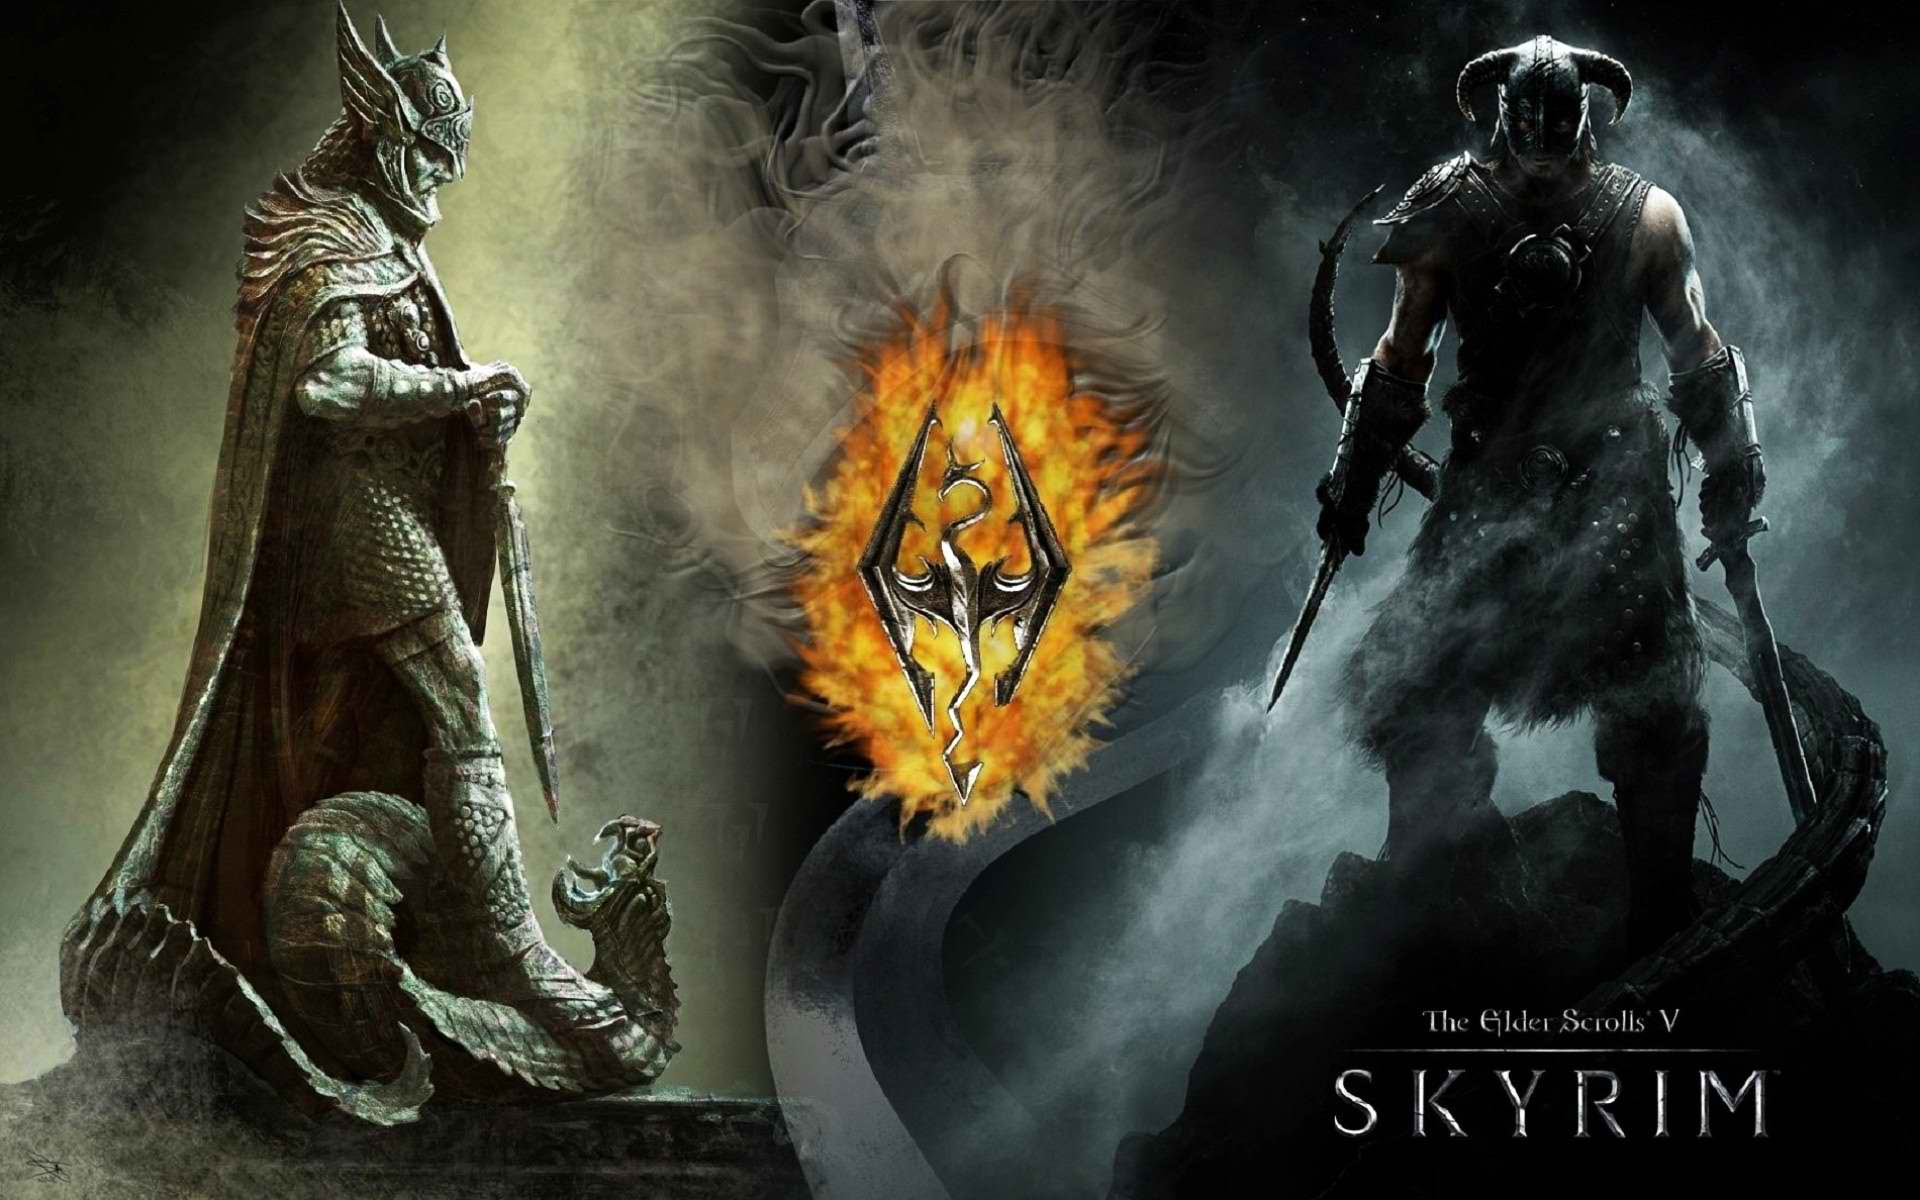 The Elder Scrolls V Skyrim Wallpaper | Wallpapers HD | Wallpaper ...